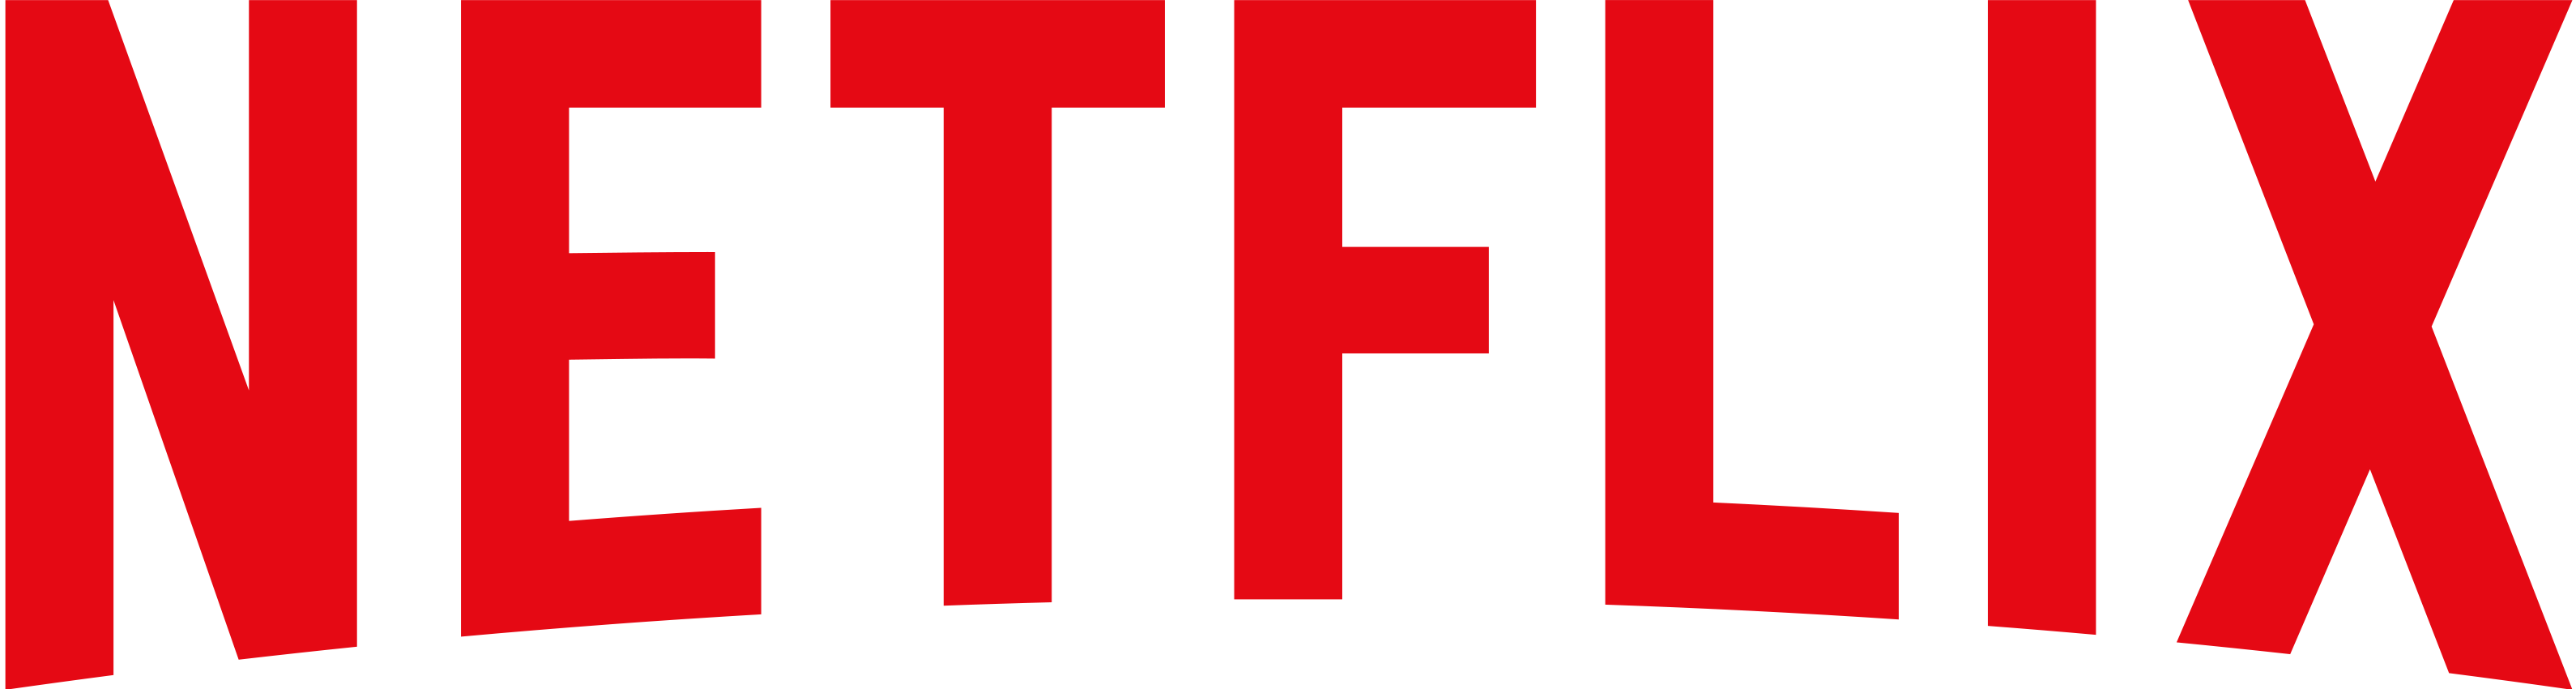 Netflix red logotype